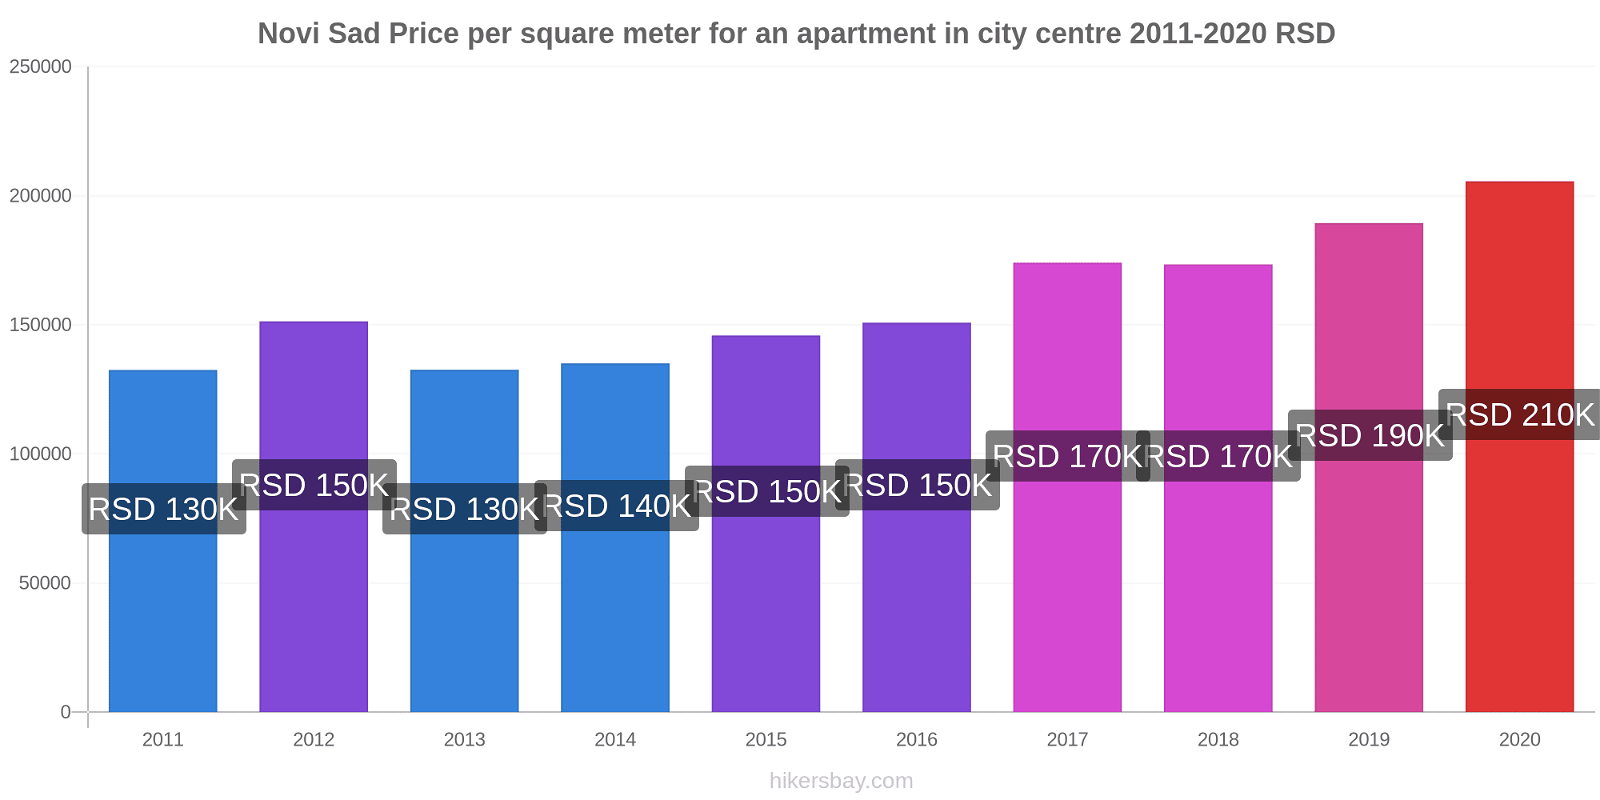 Novi Sad price changes Price per square meter for an apartment in city centre hikersbay.com